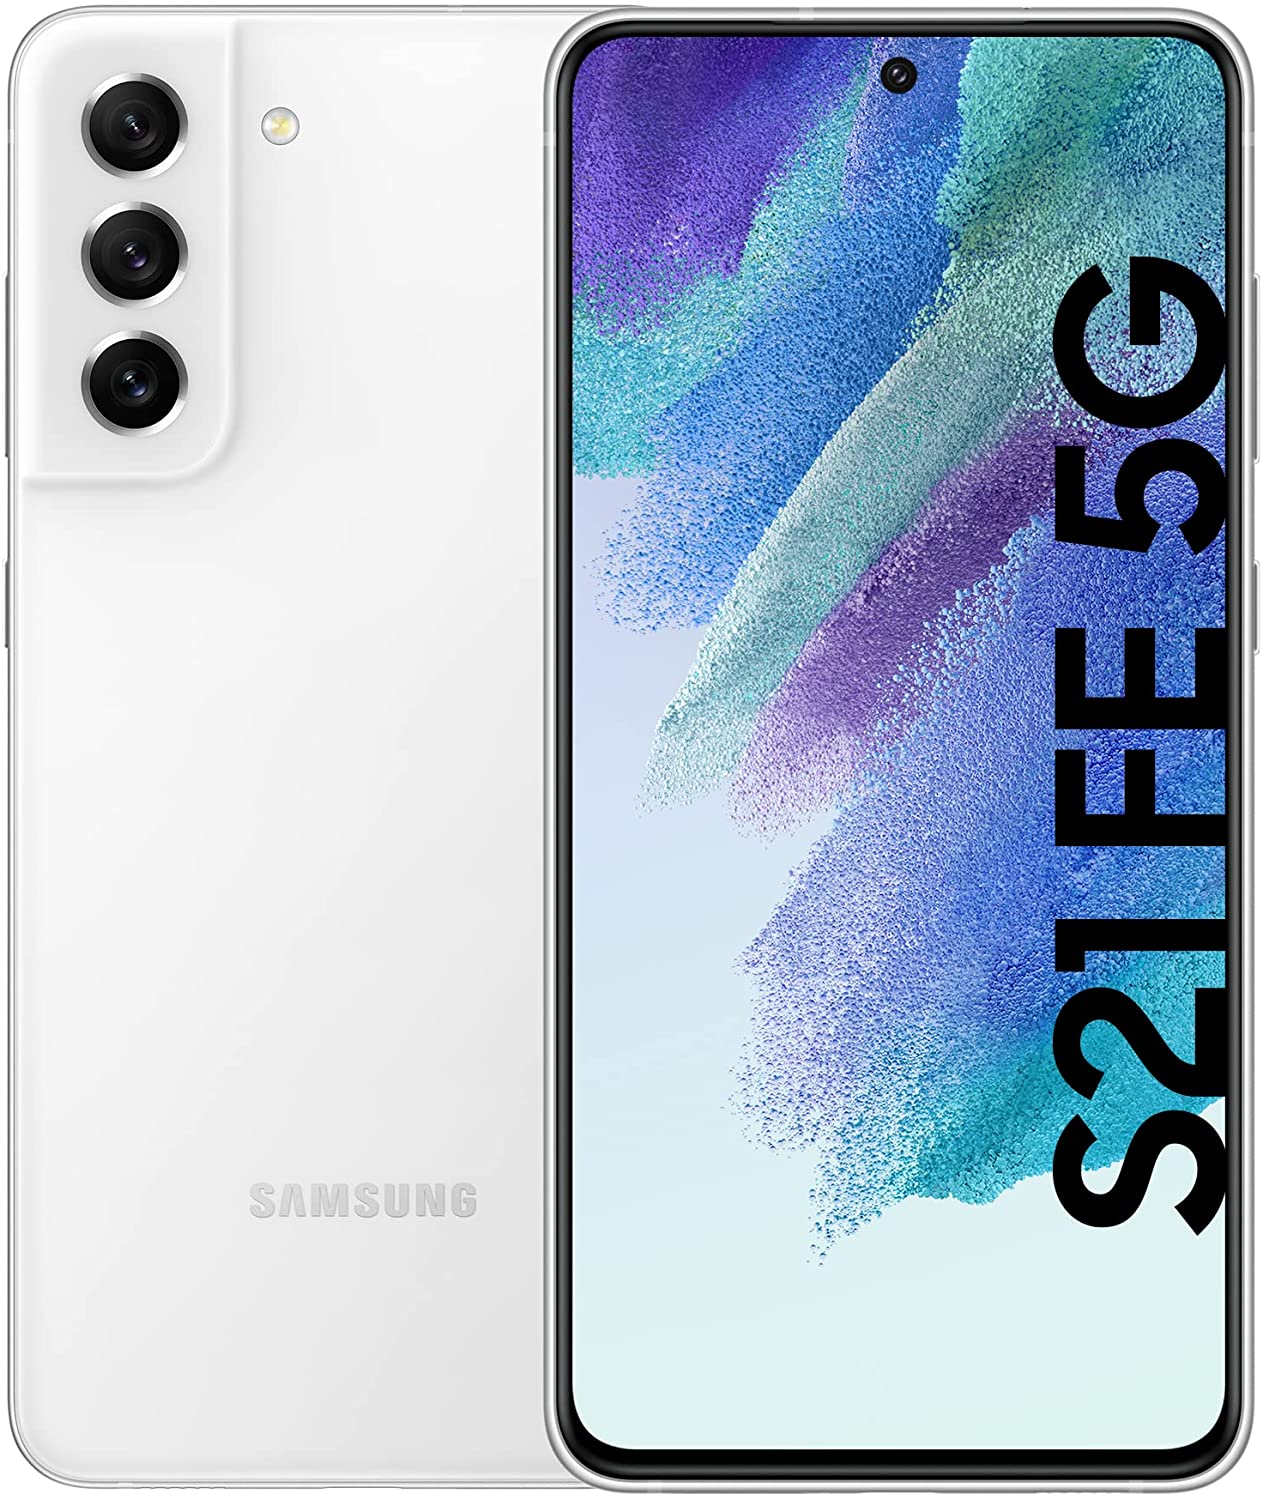 Samsung Galaxy S21 FE £699.99 on Tesco Mobile Pay As You Go